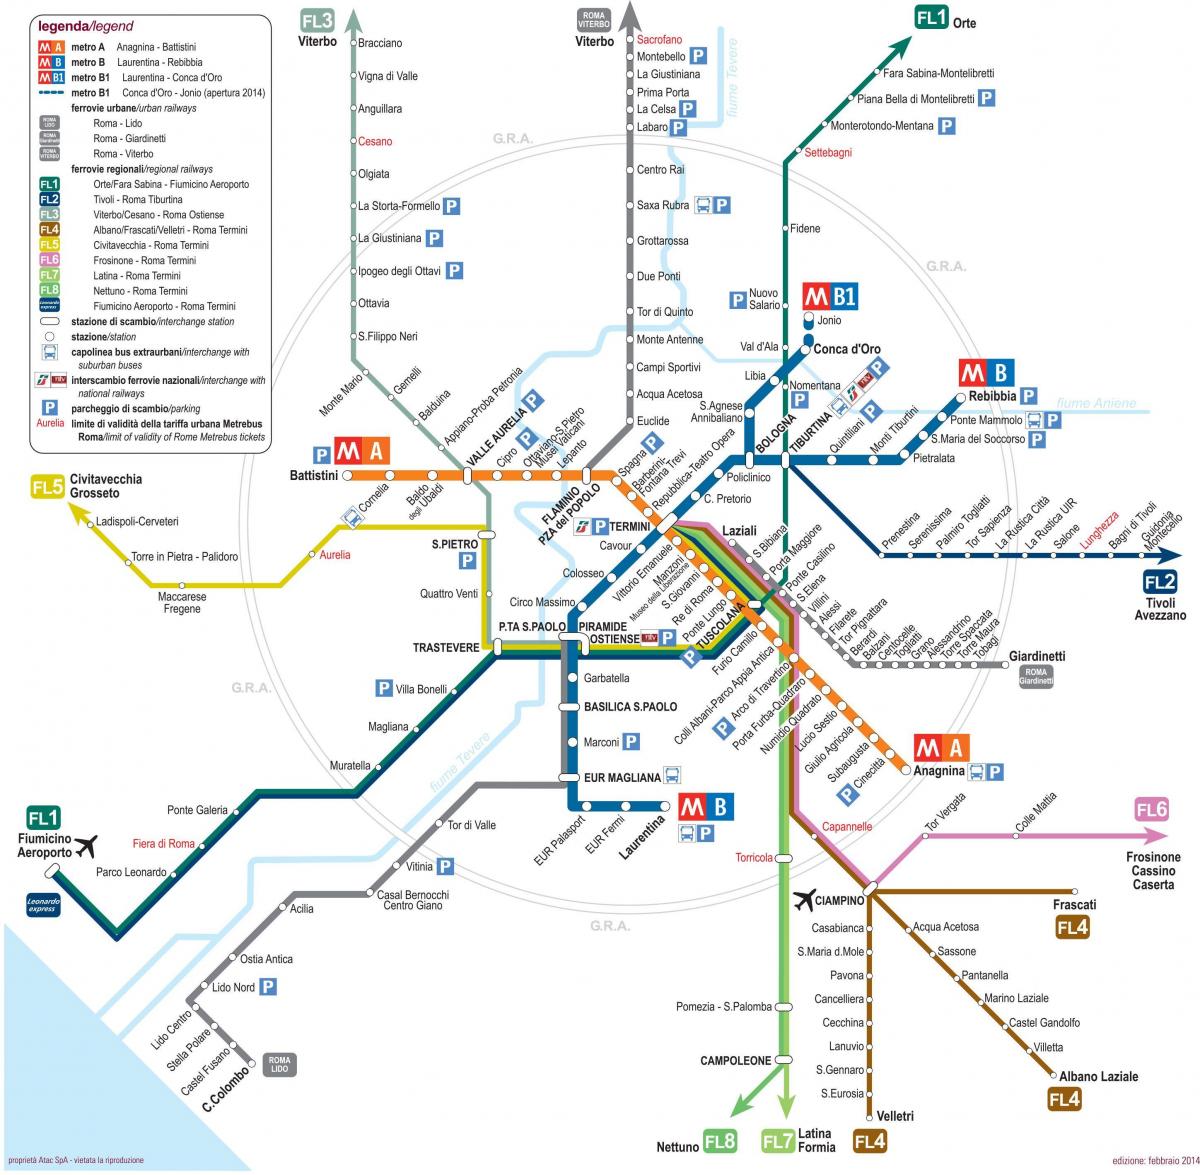 Map of Rome rail